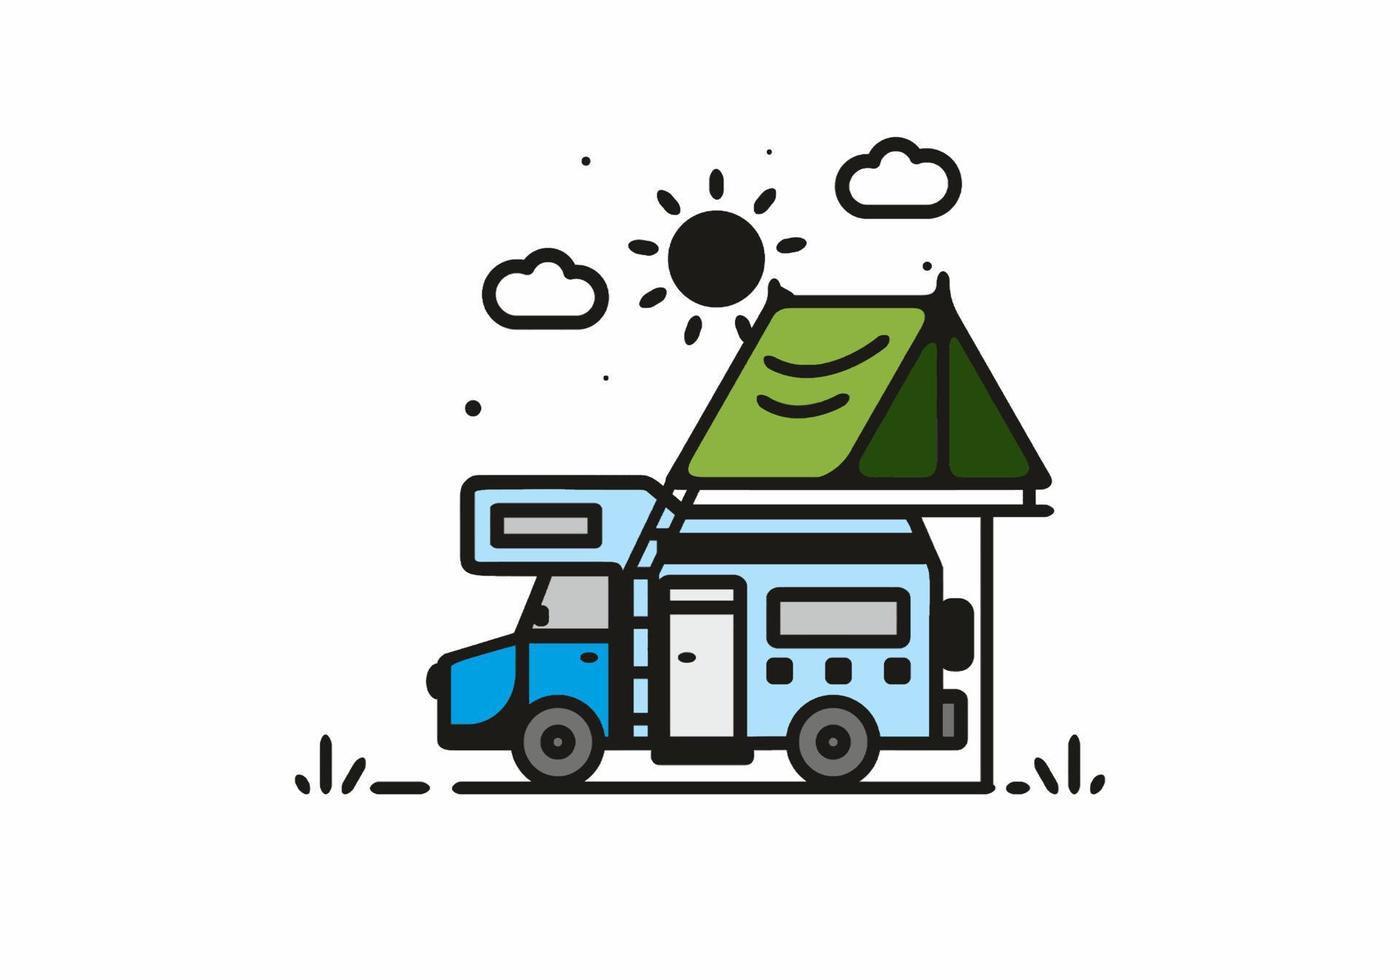 Simple camper van camping illustration vector